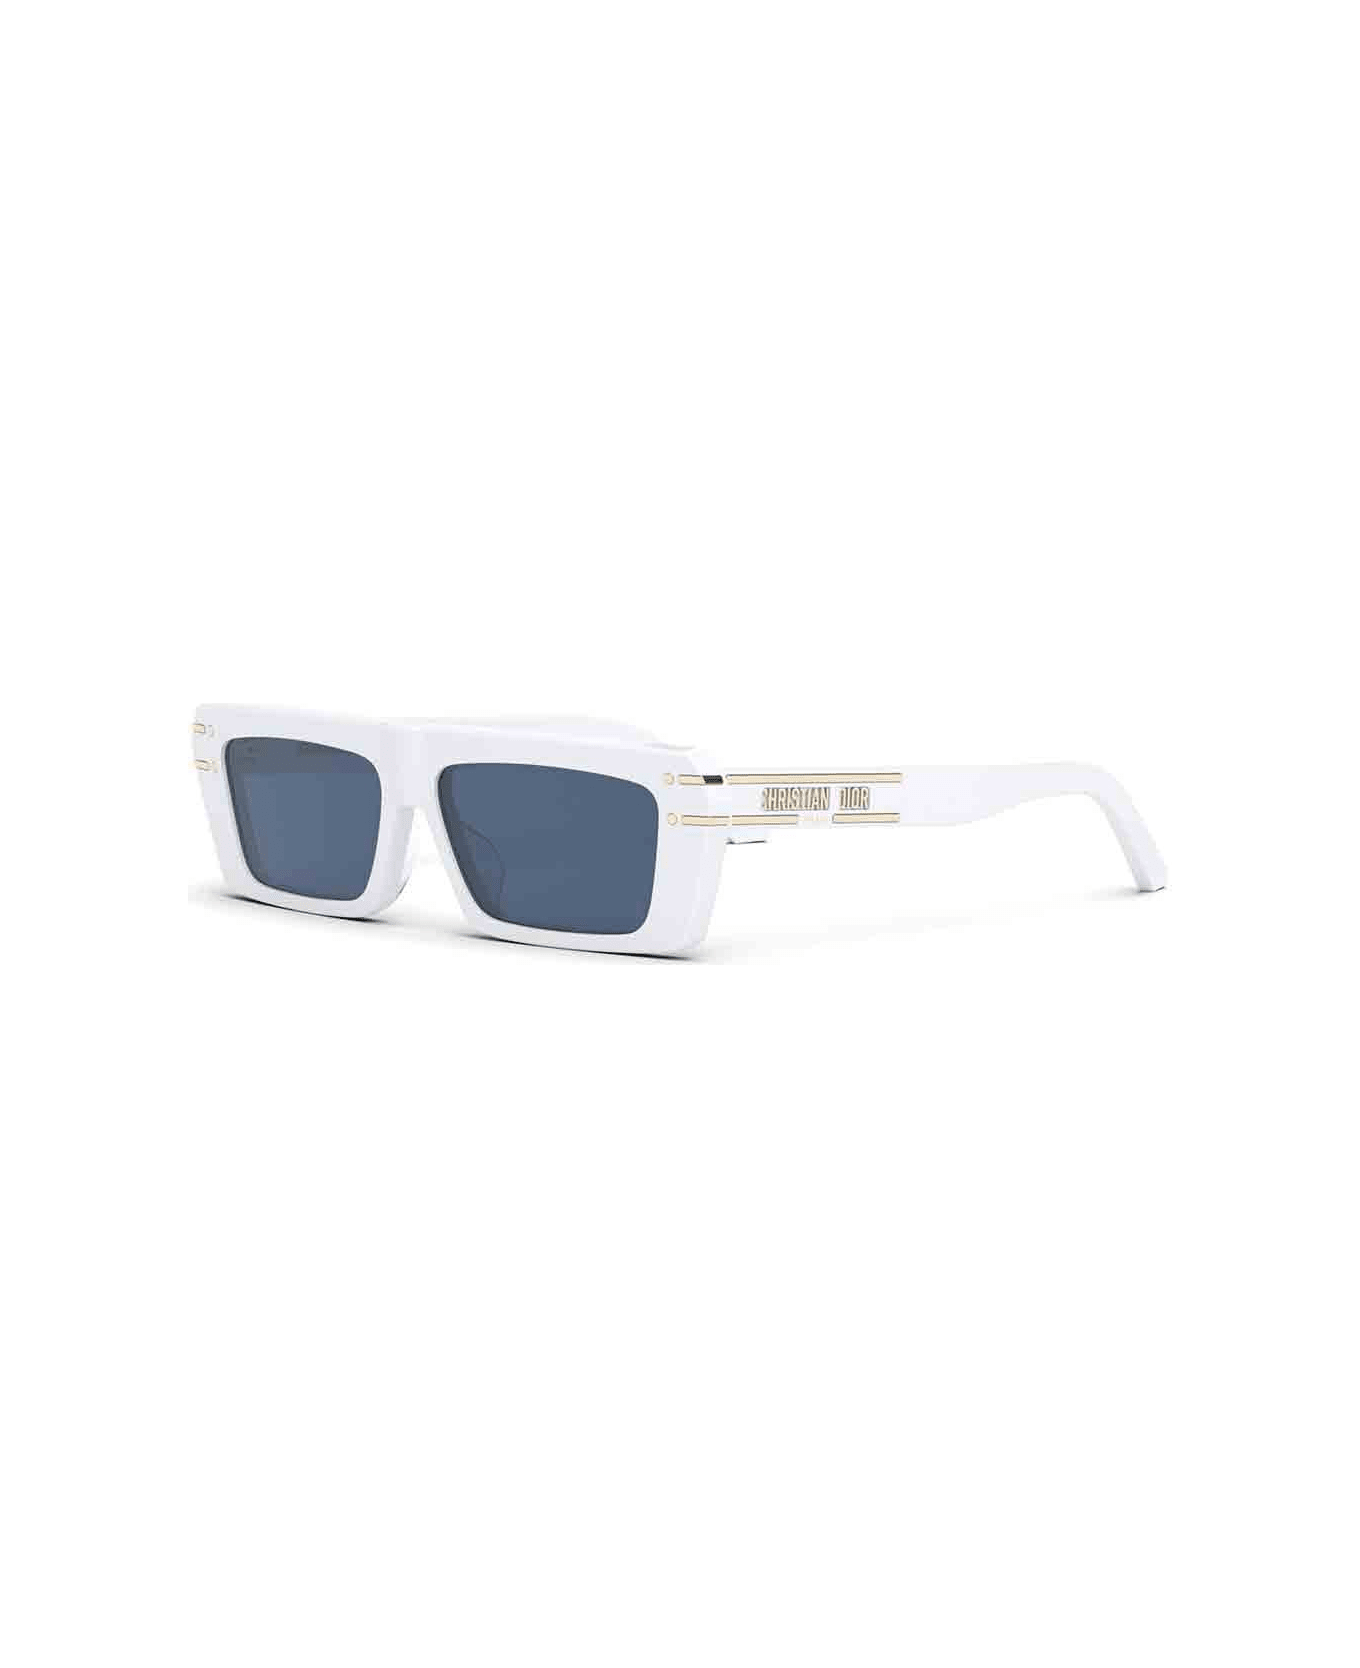 Dior Eyewear Sunglasses - Bianco/Blu